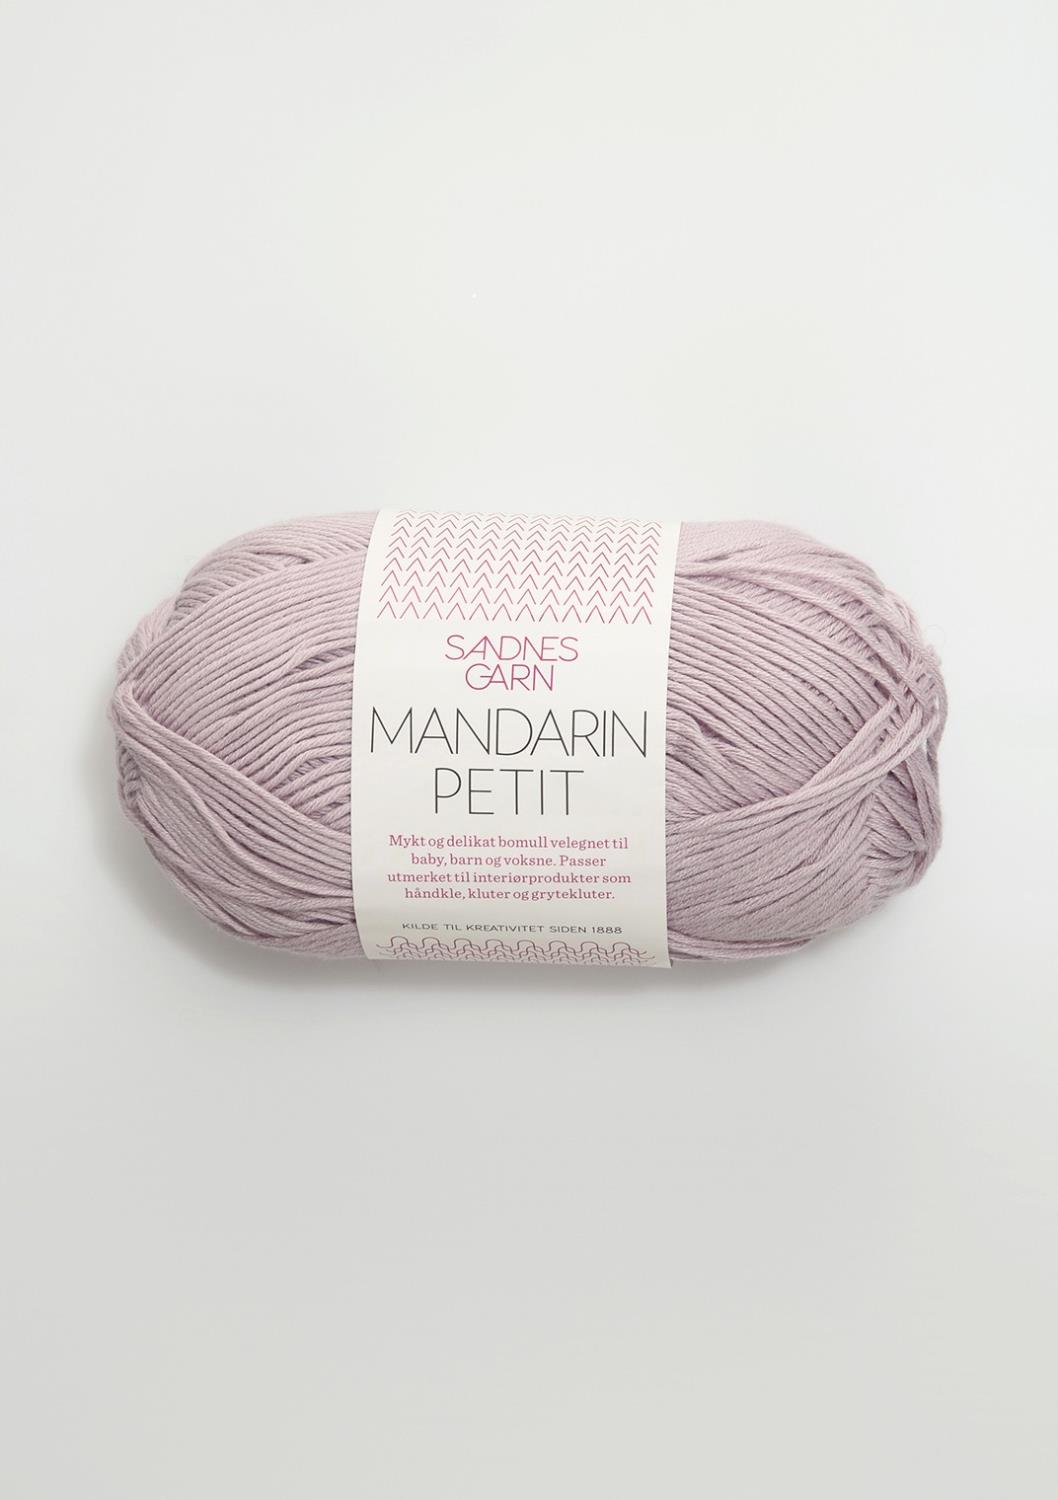 Mandarin Petit Sandnes 4621 - Støvet Rosa